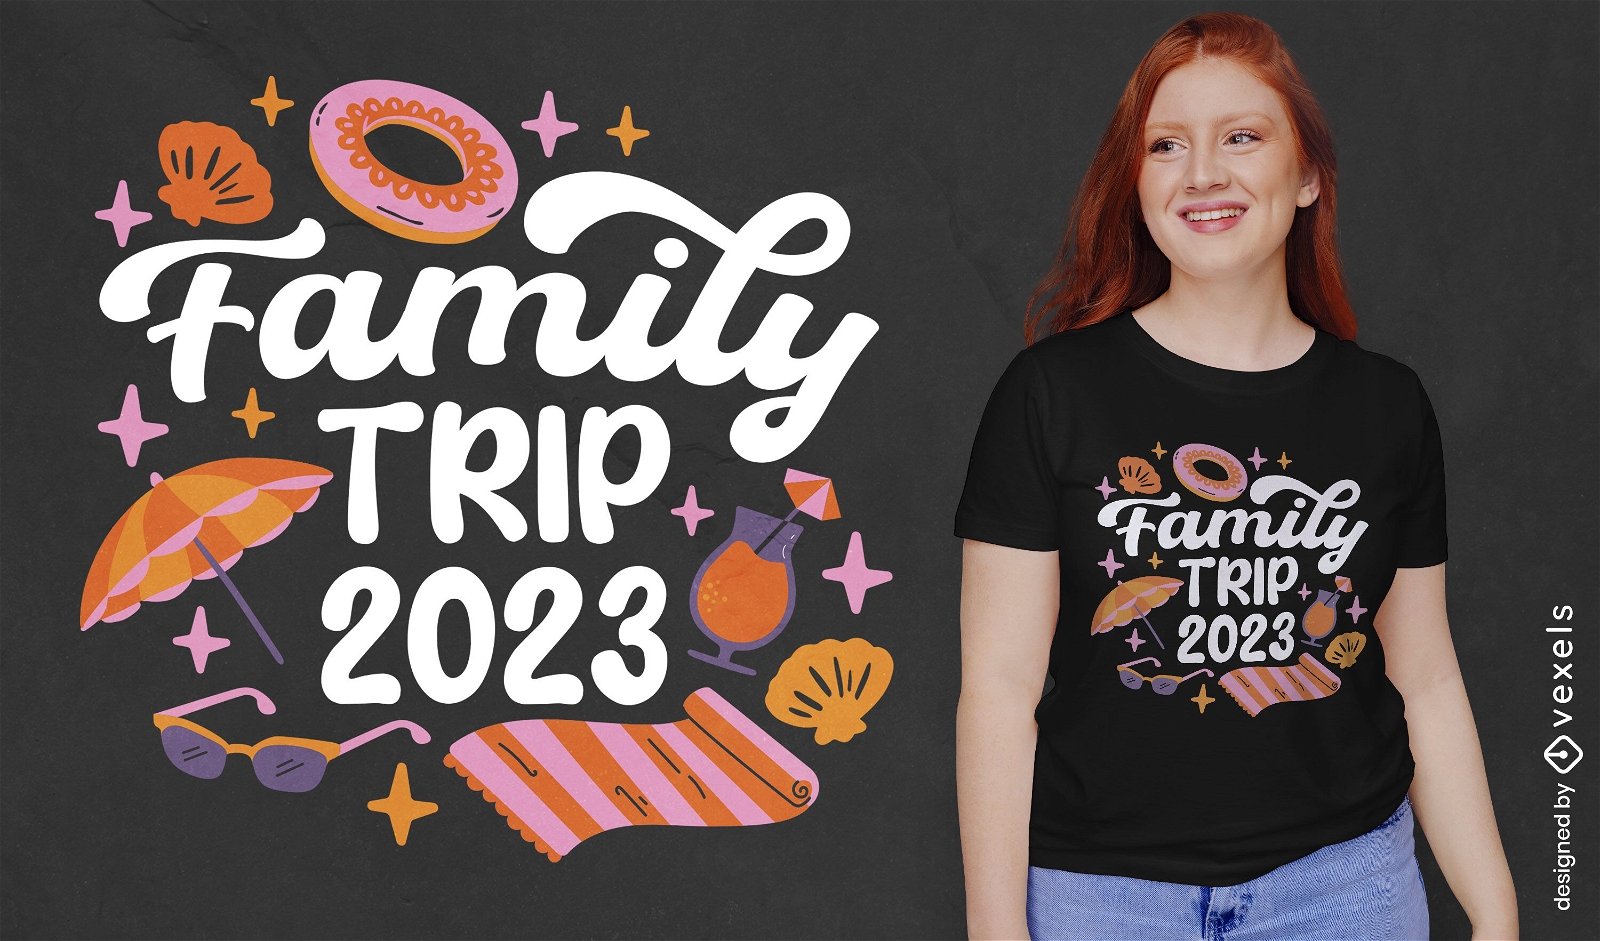 Beach family trip quote t-shirt design